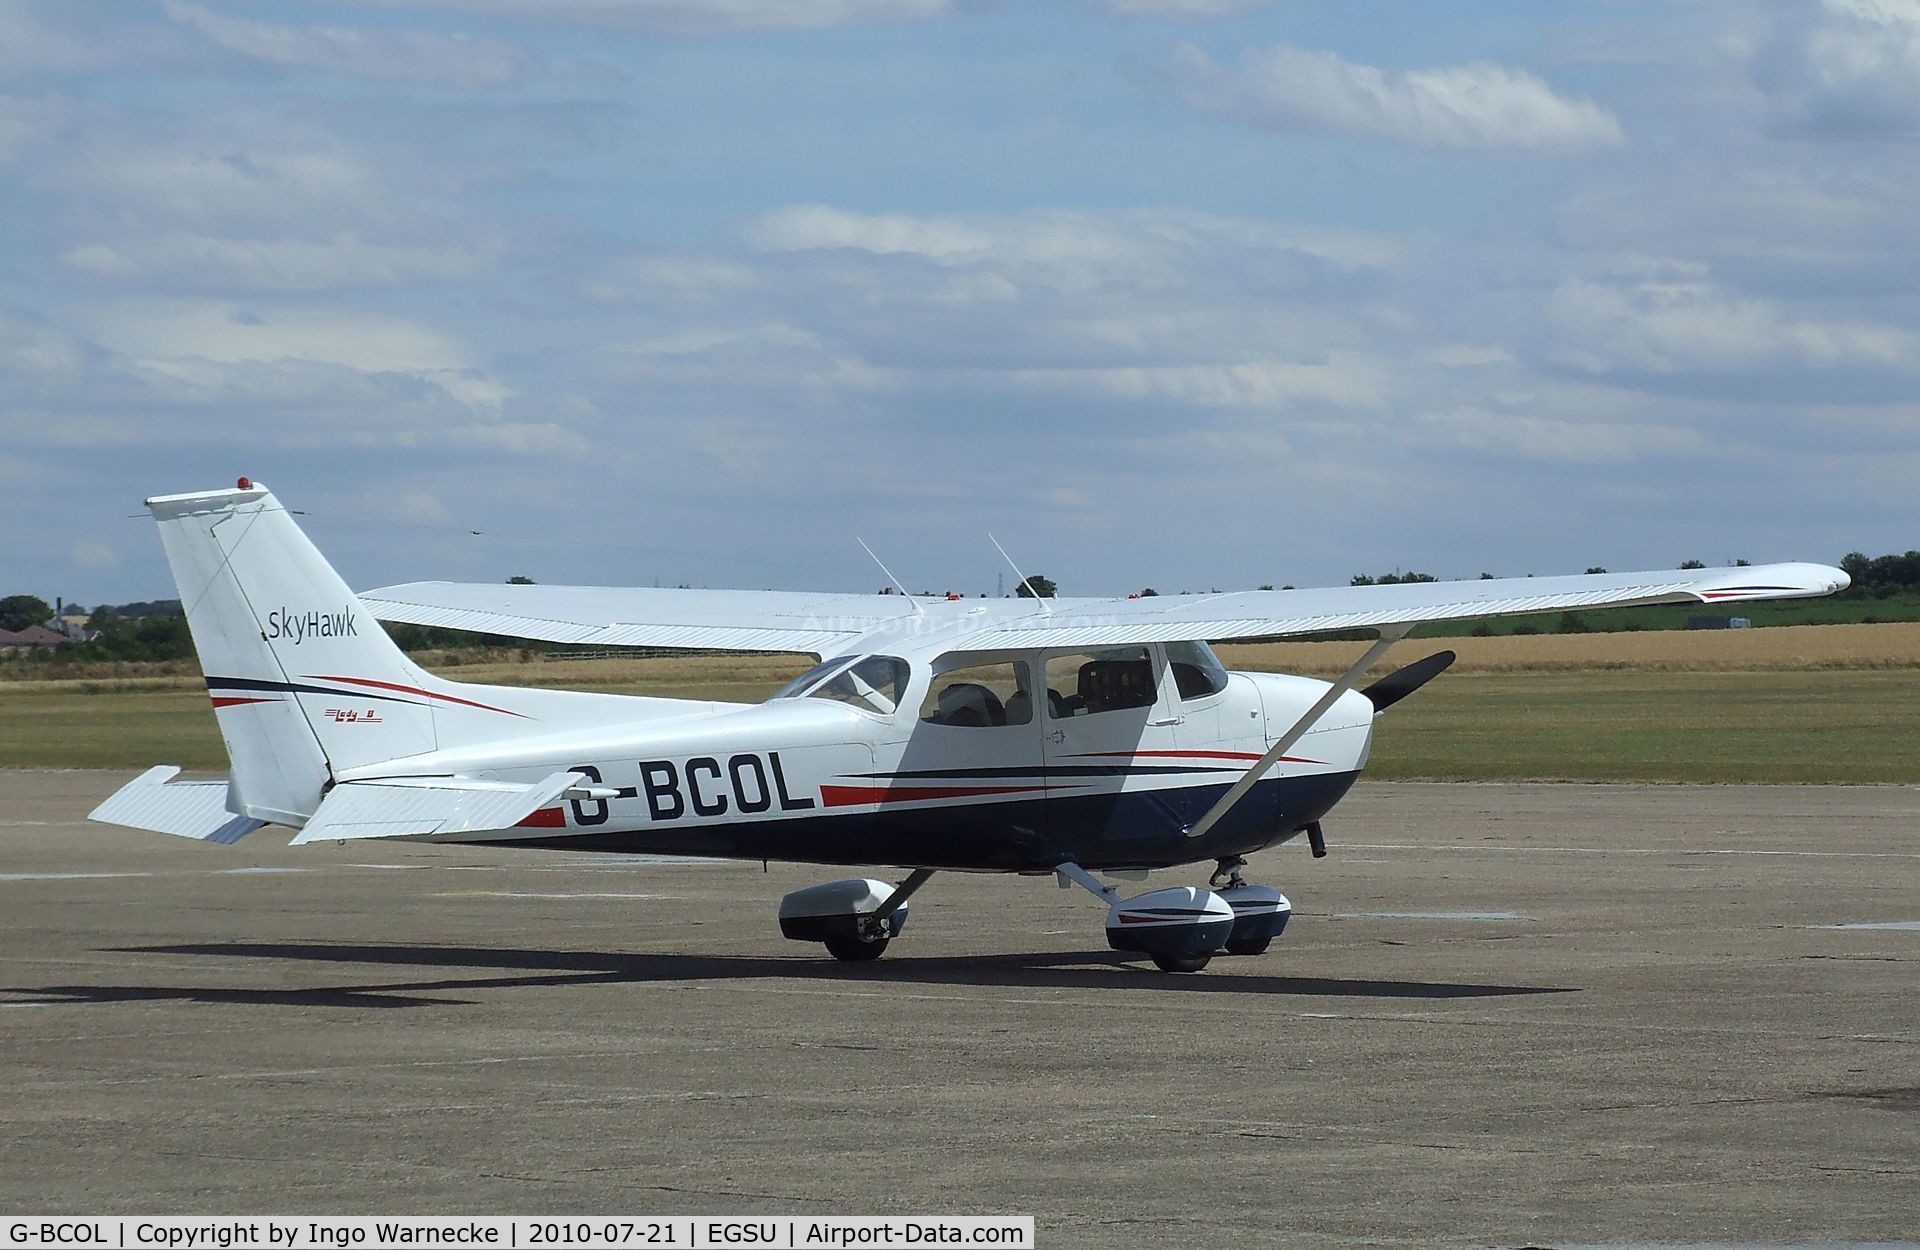 G-BCOL, 1974 Reims F172M Skyhawk Skyhawk C/N 1233, Cessna (Reims) F172M Skyhawk at Duxford airfield